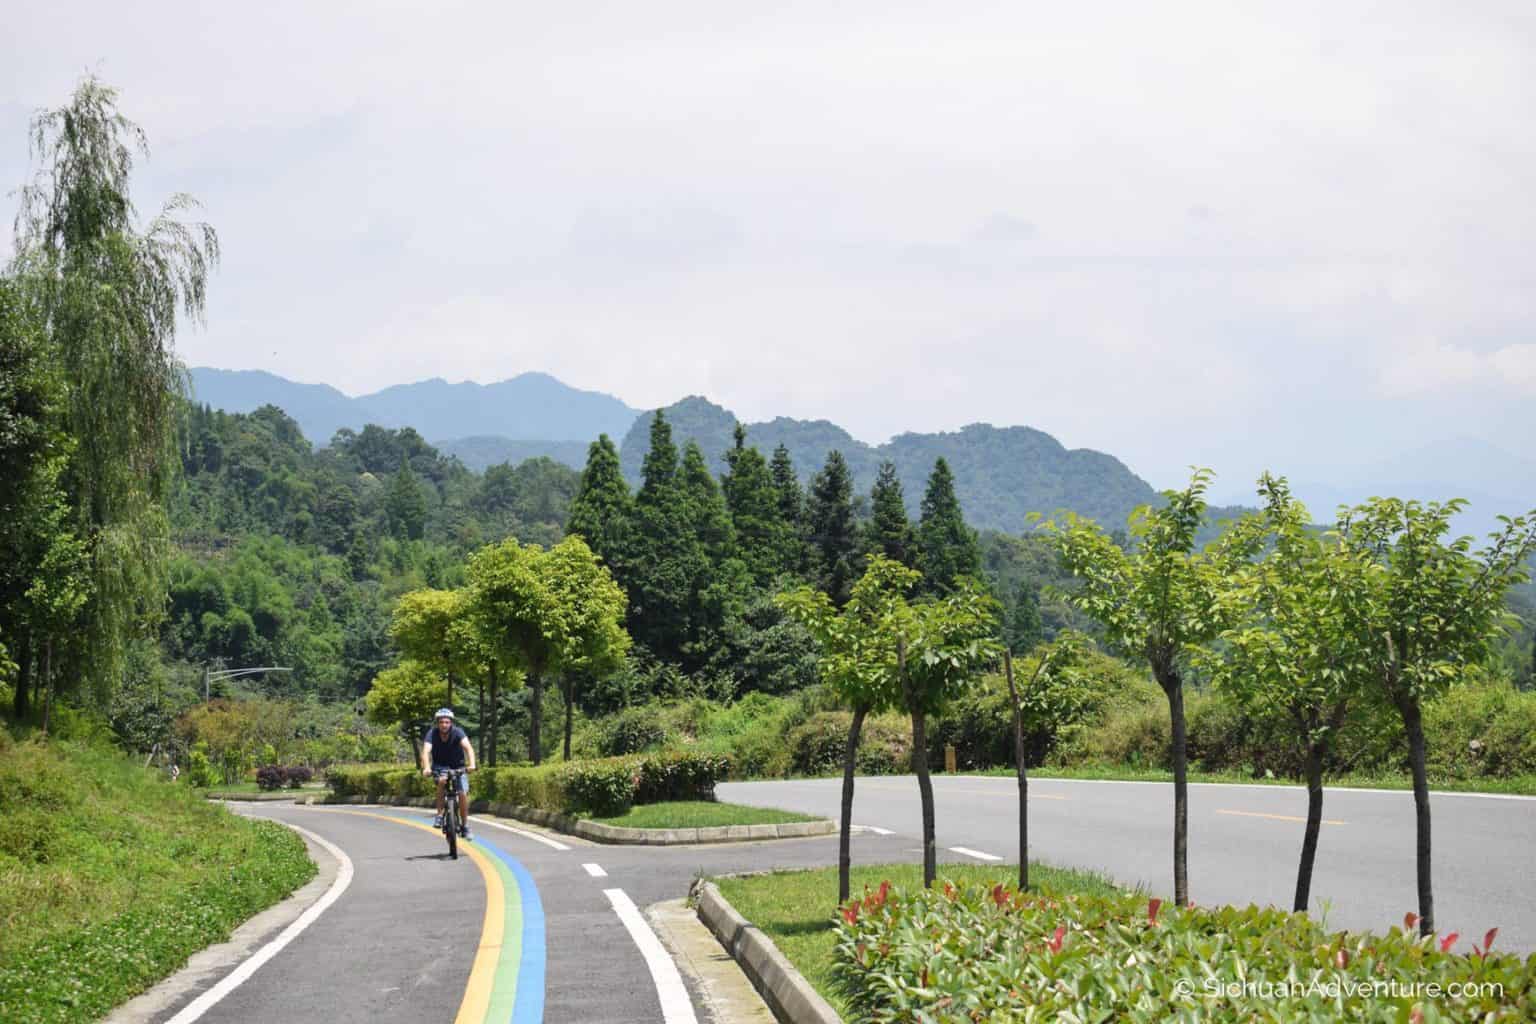 Biking Trails Between Panda Valley and Mount Qingcheng